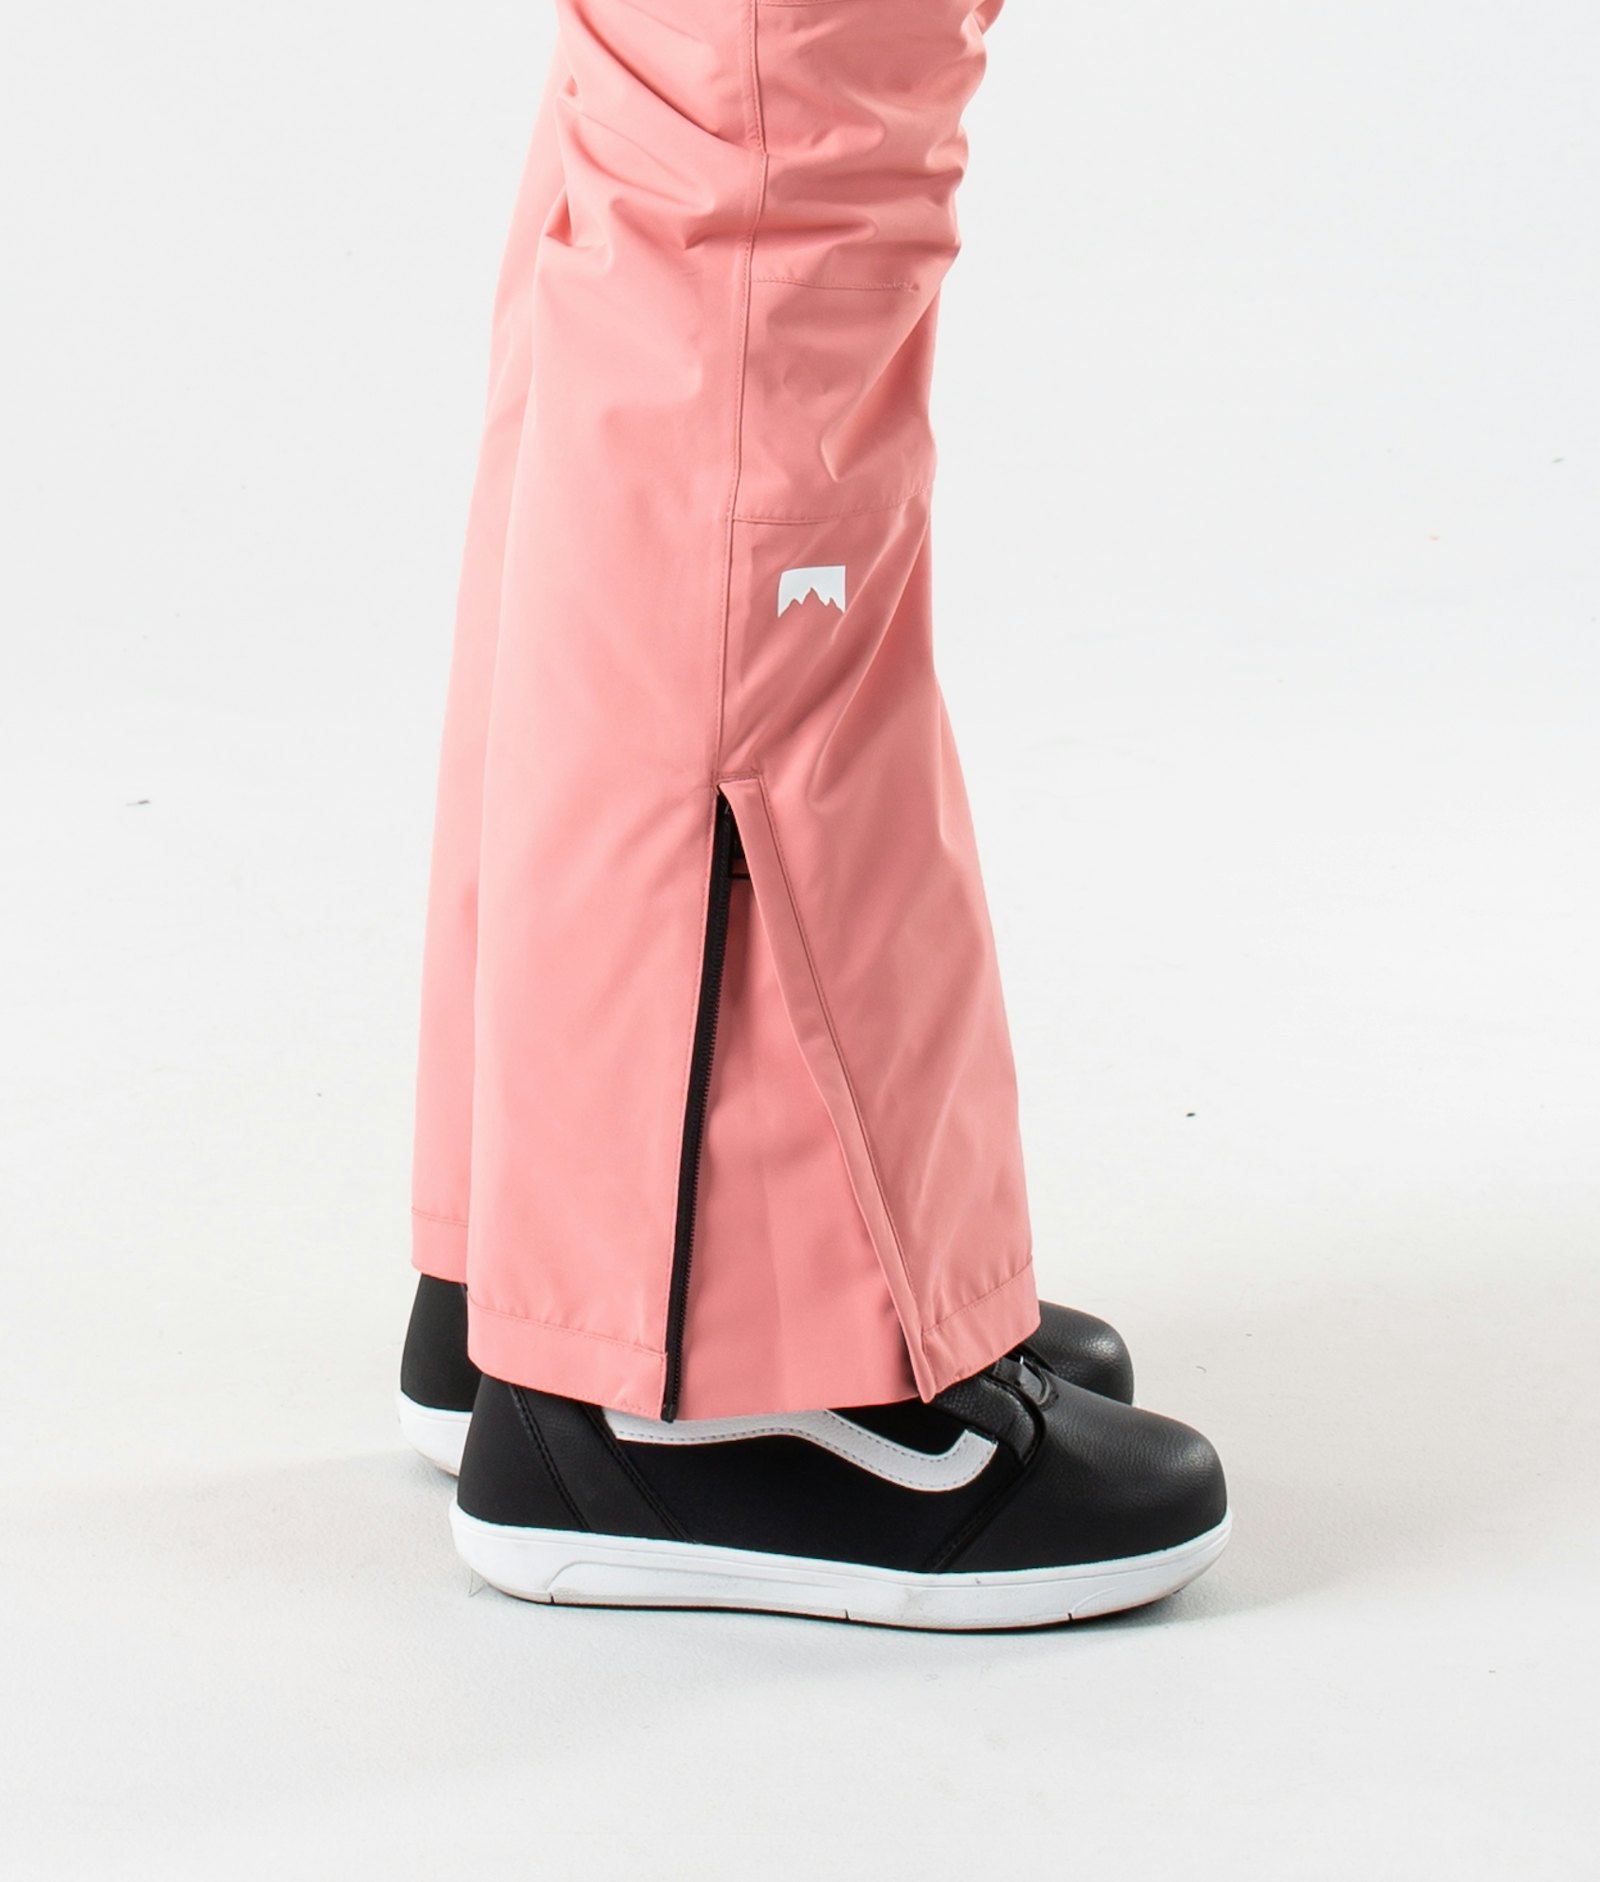 Doom W 2019 Pantalones Snowboard Mujer Pink